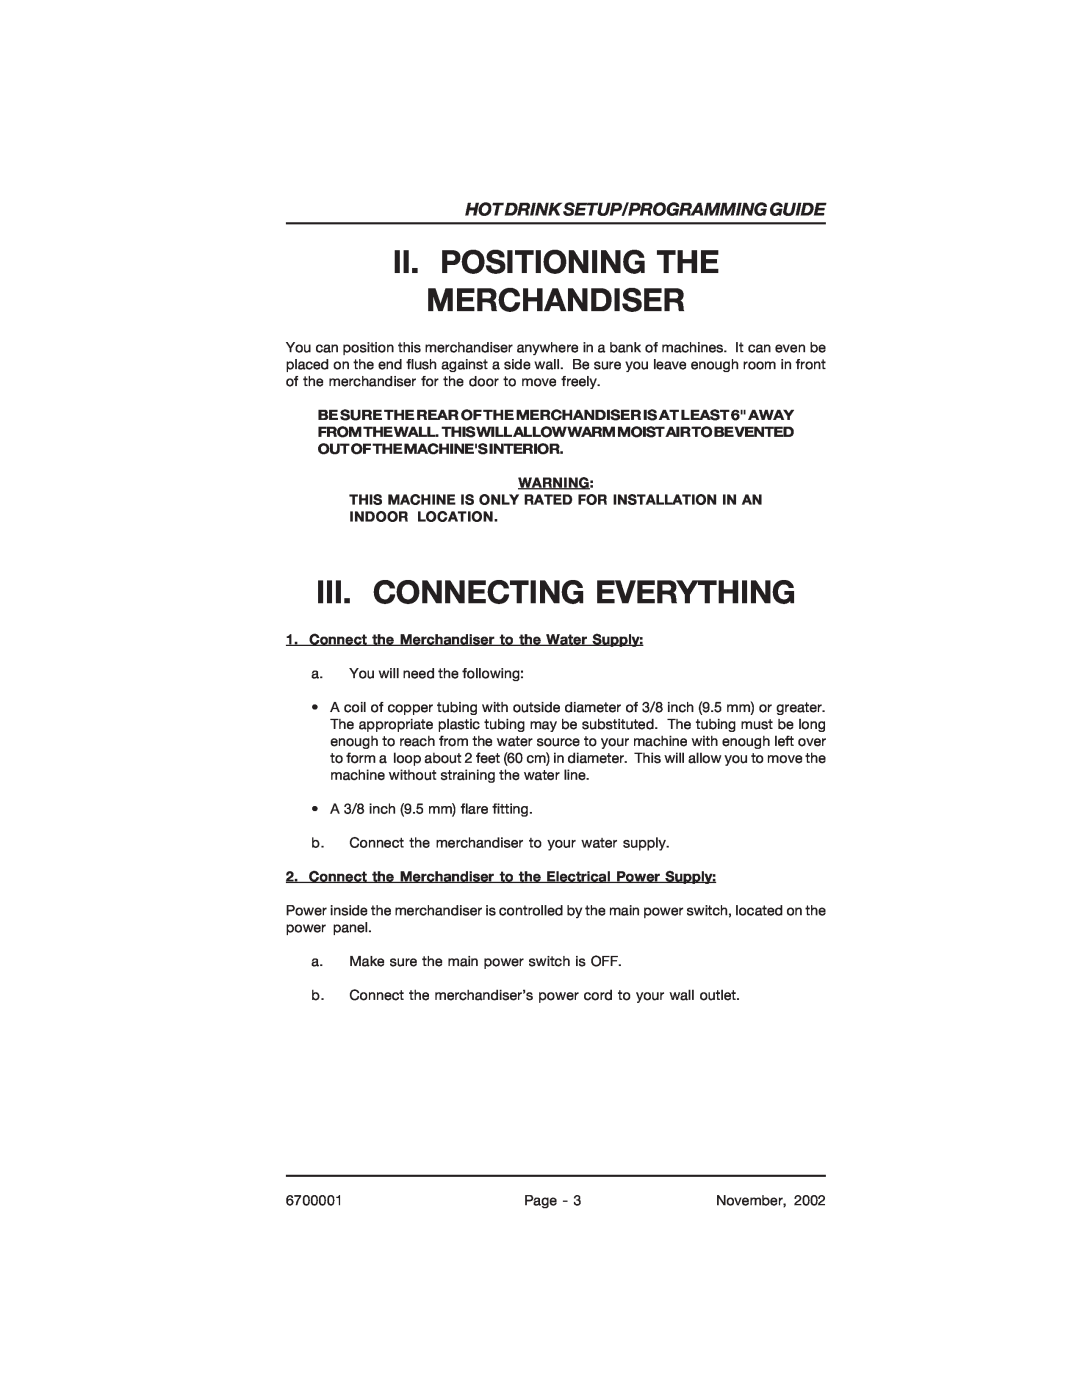 Crane Merchandising Systems 678, 670 manual Ii. Positioning The Merchandiser, Iii. Connecting Everything 